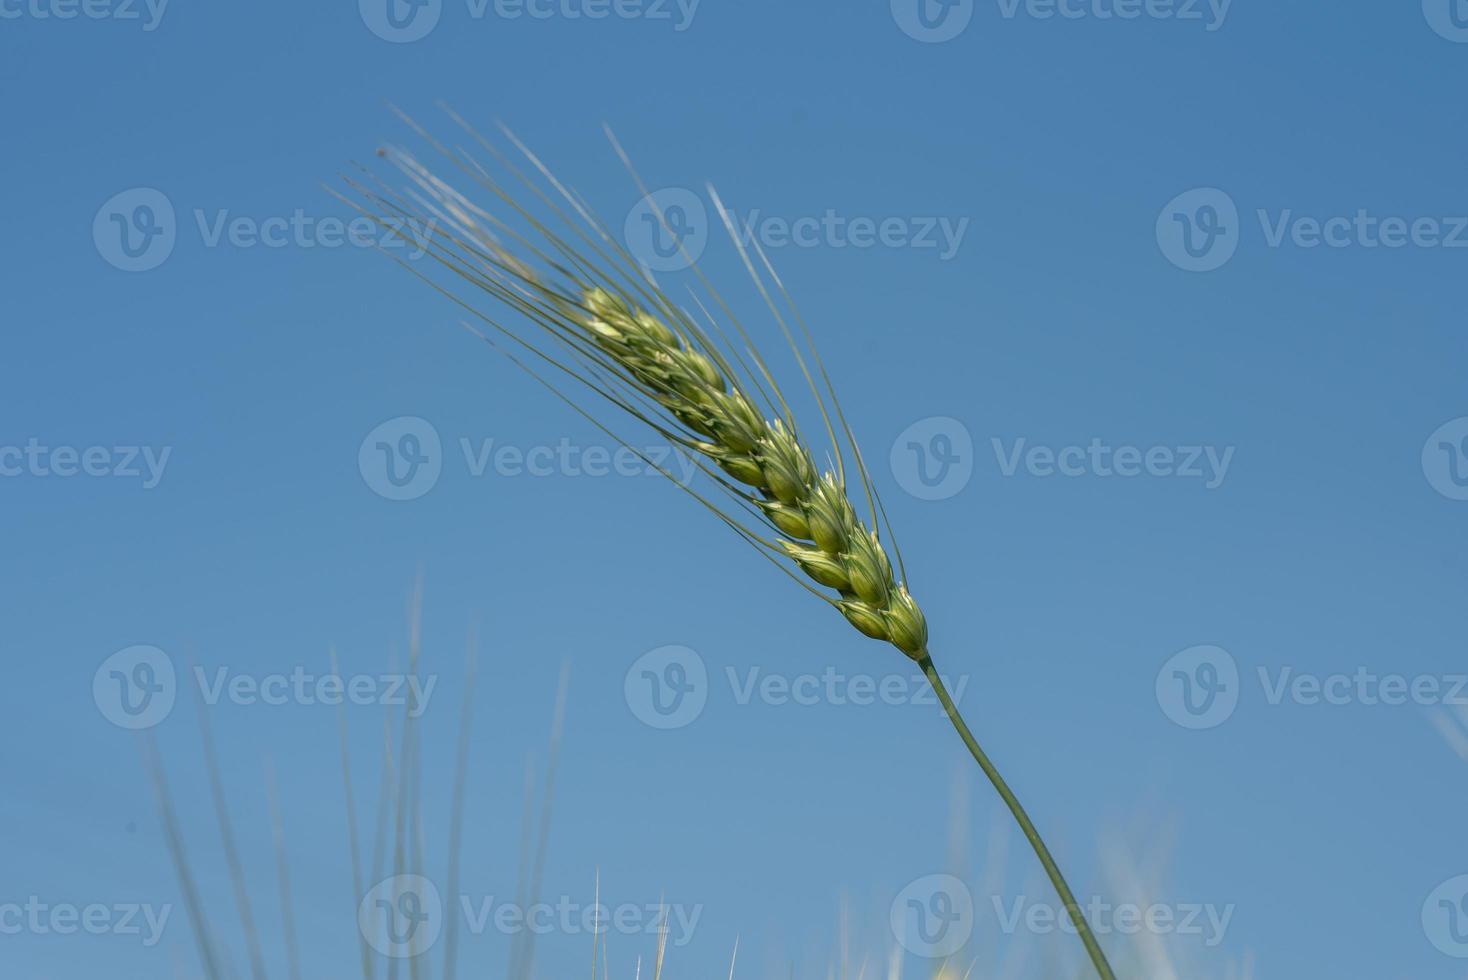 Green wheat at organic farm field photo